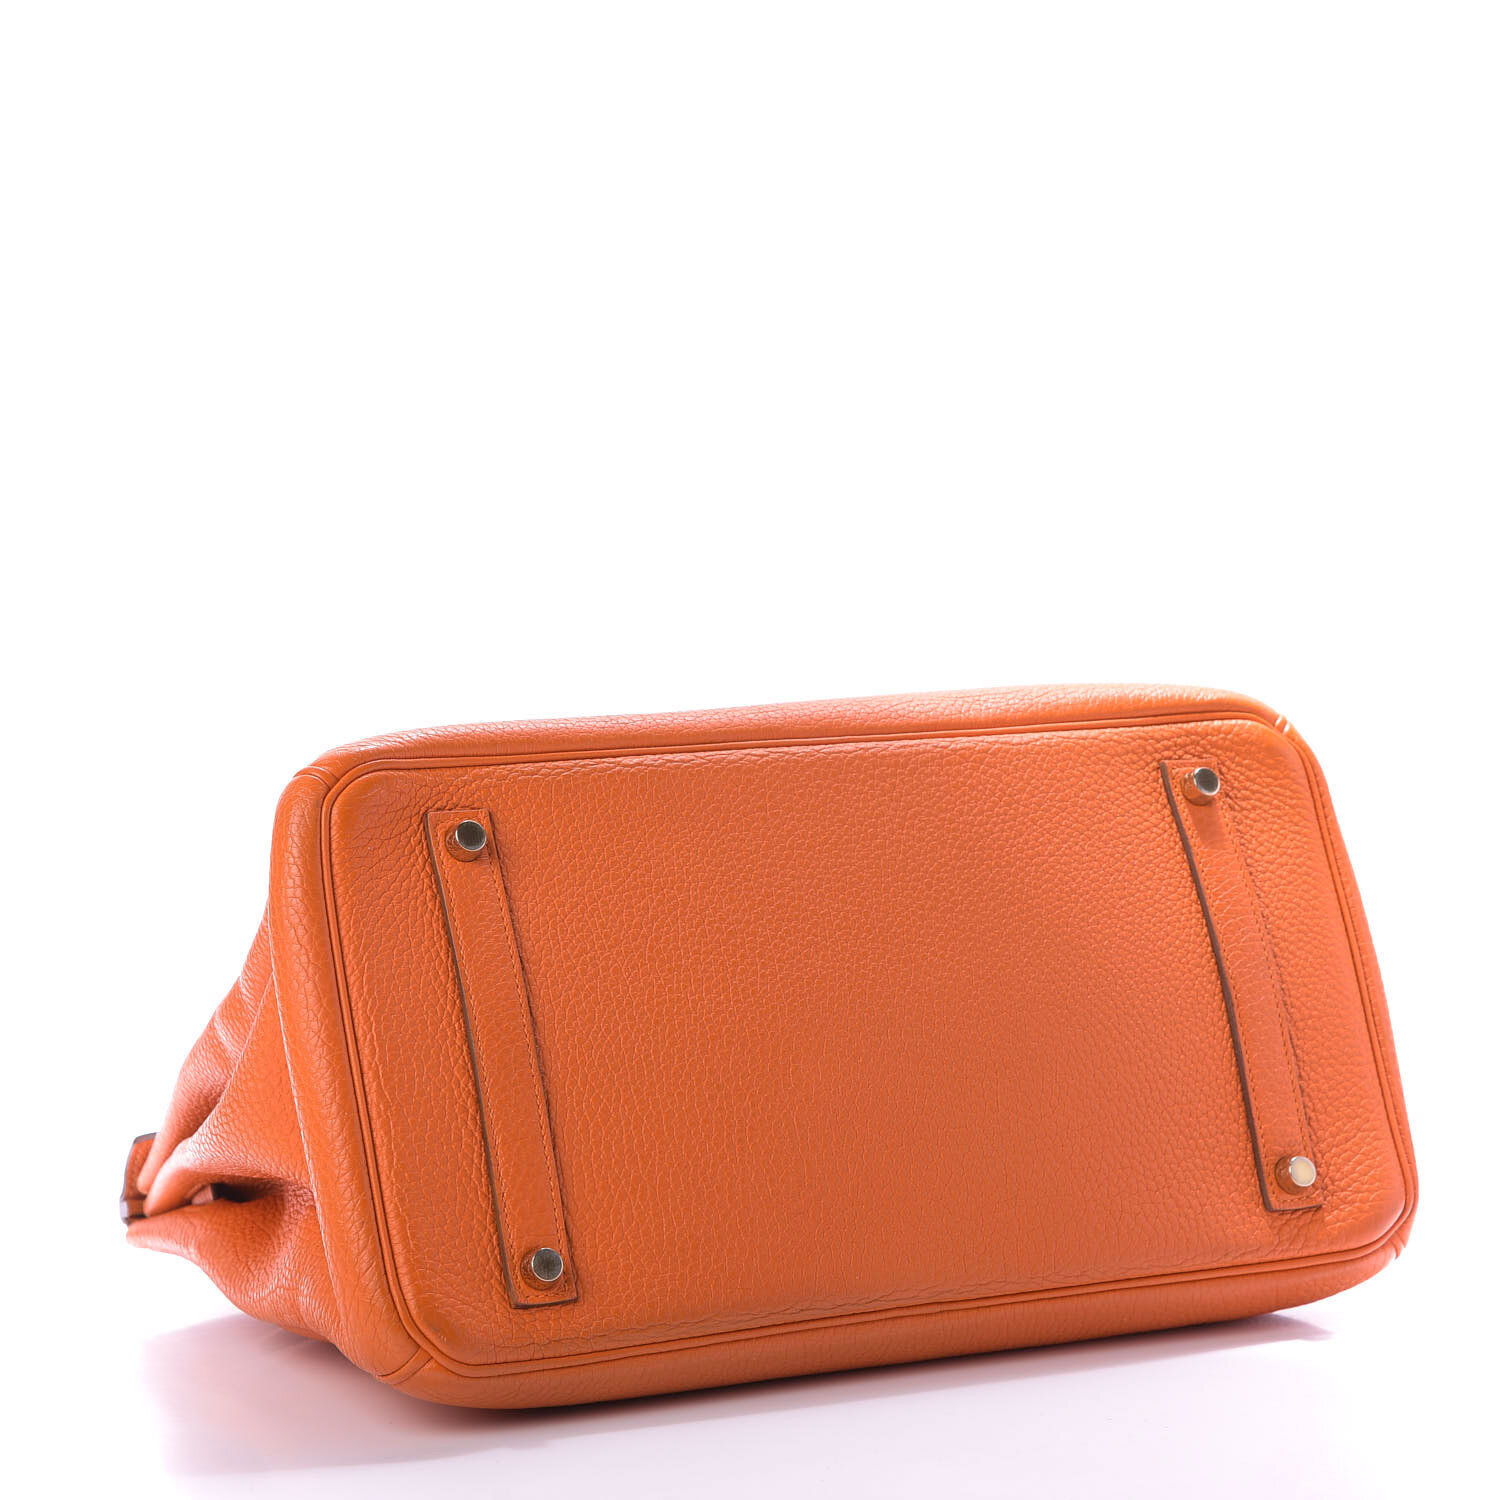 hermes-togo-birkin-35-orange-available-for-sale-collecting-luxury-3.jpg